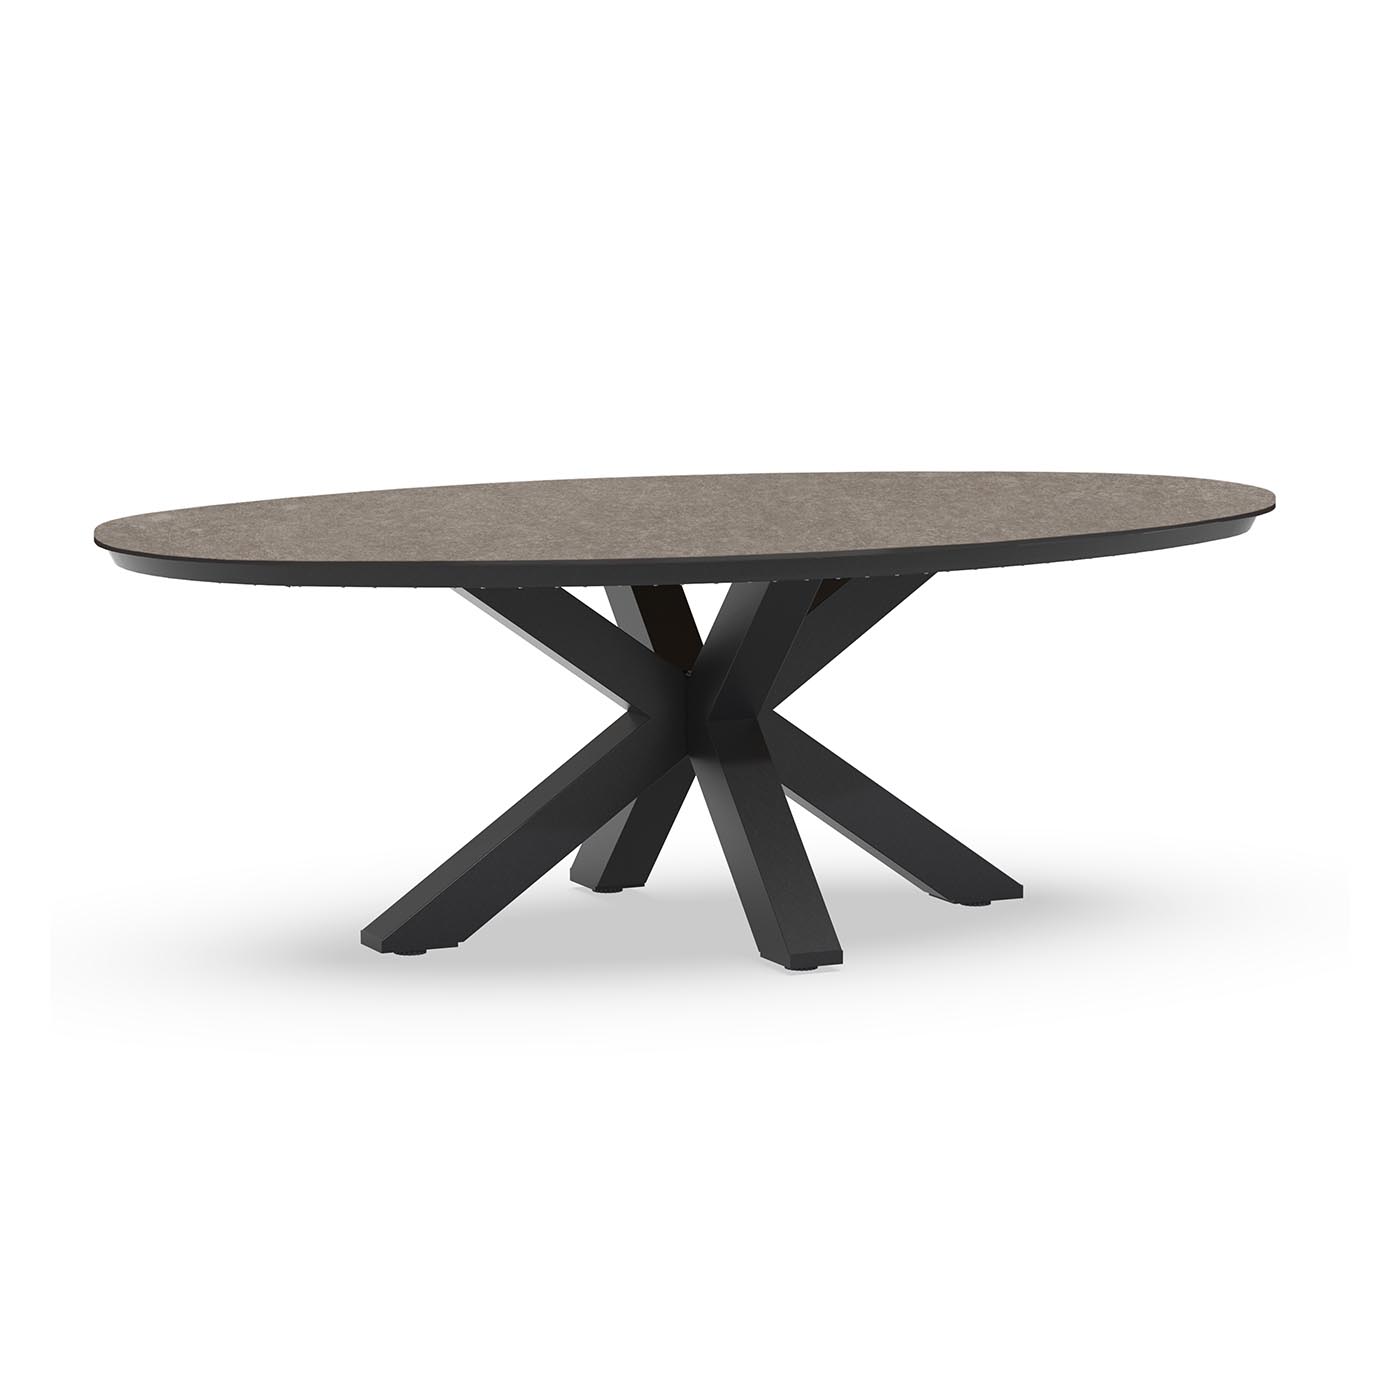 Oblong Dining Table Trespa Dark Basalt 220 x 130 cm Charcoal